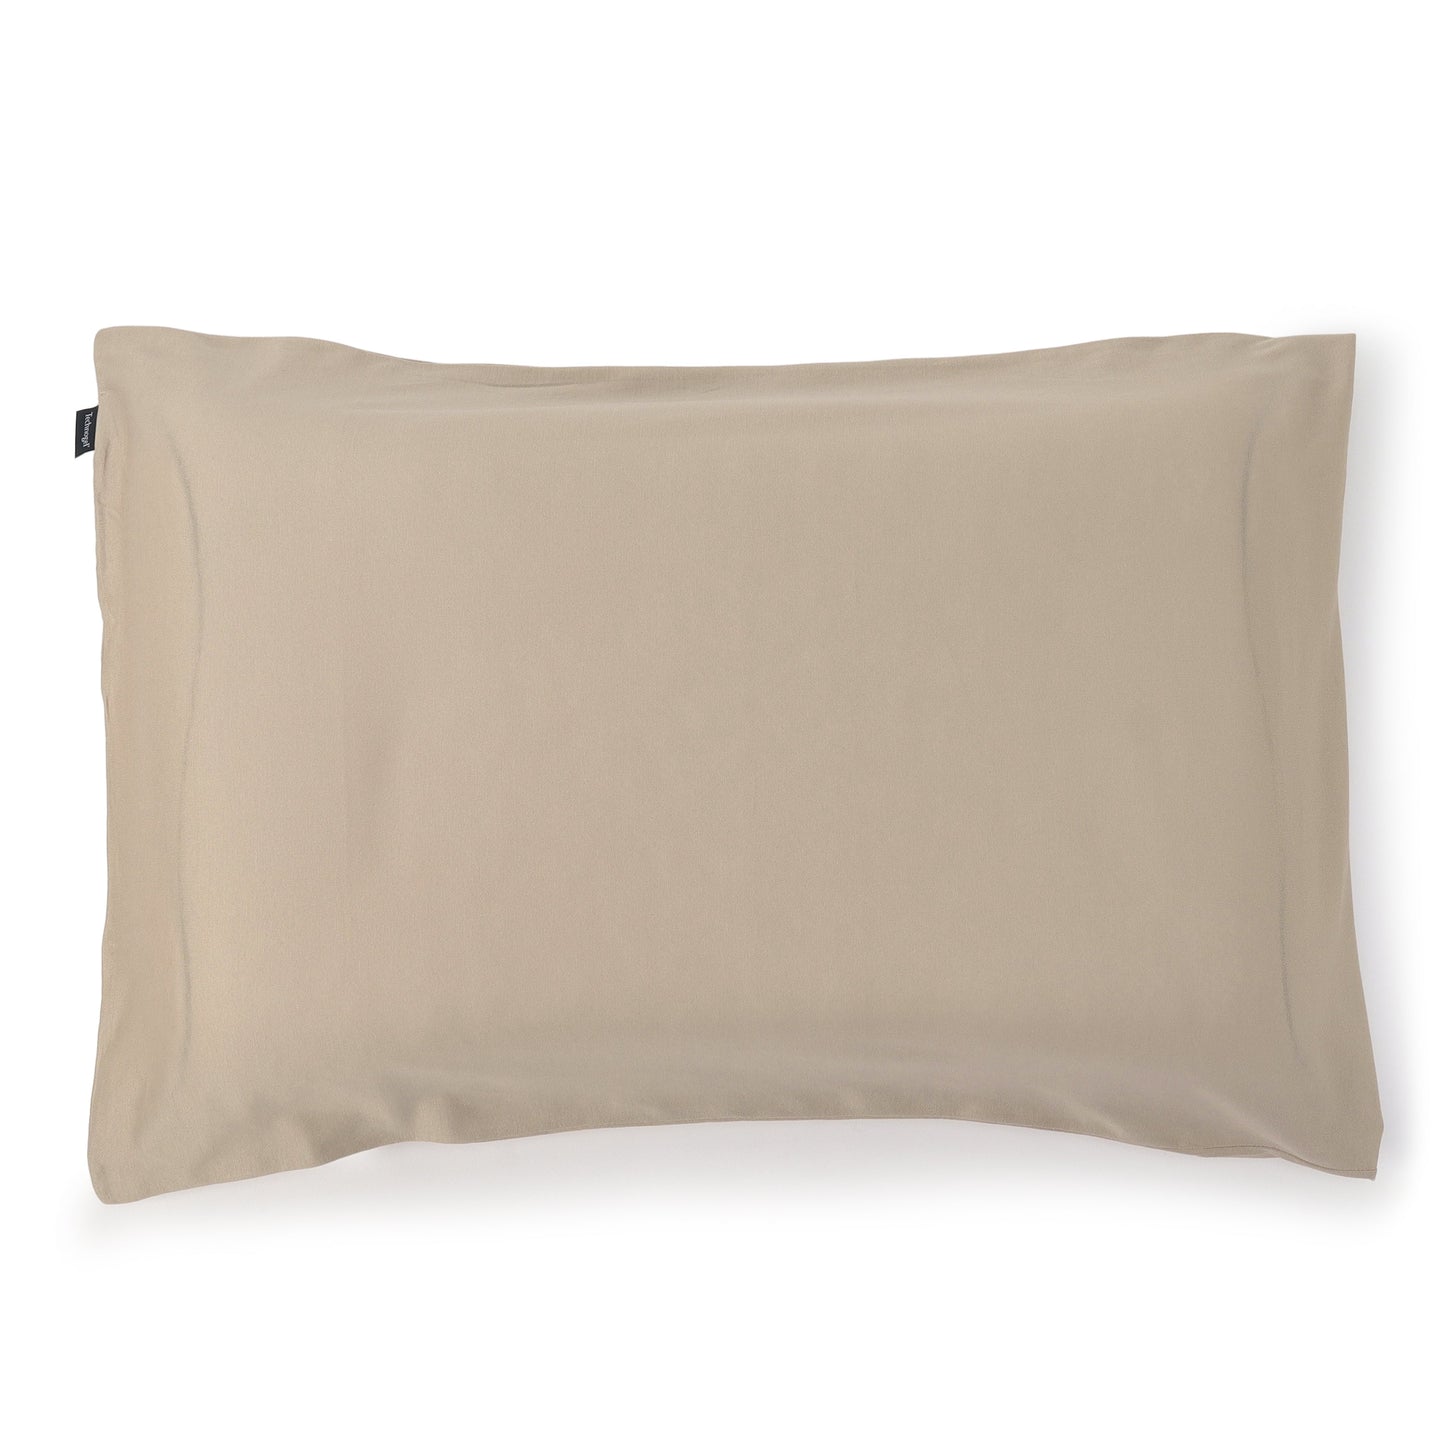 Technogel Sleeping プラチナコットンの専用枕カバー